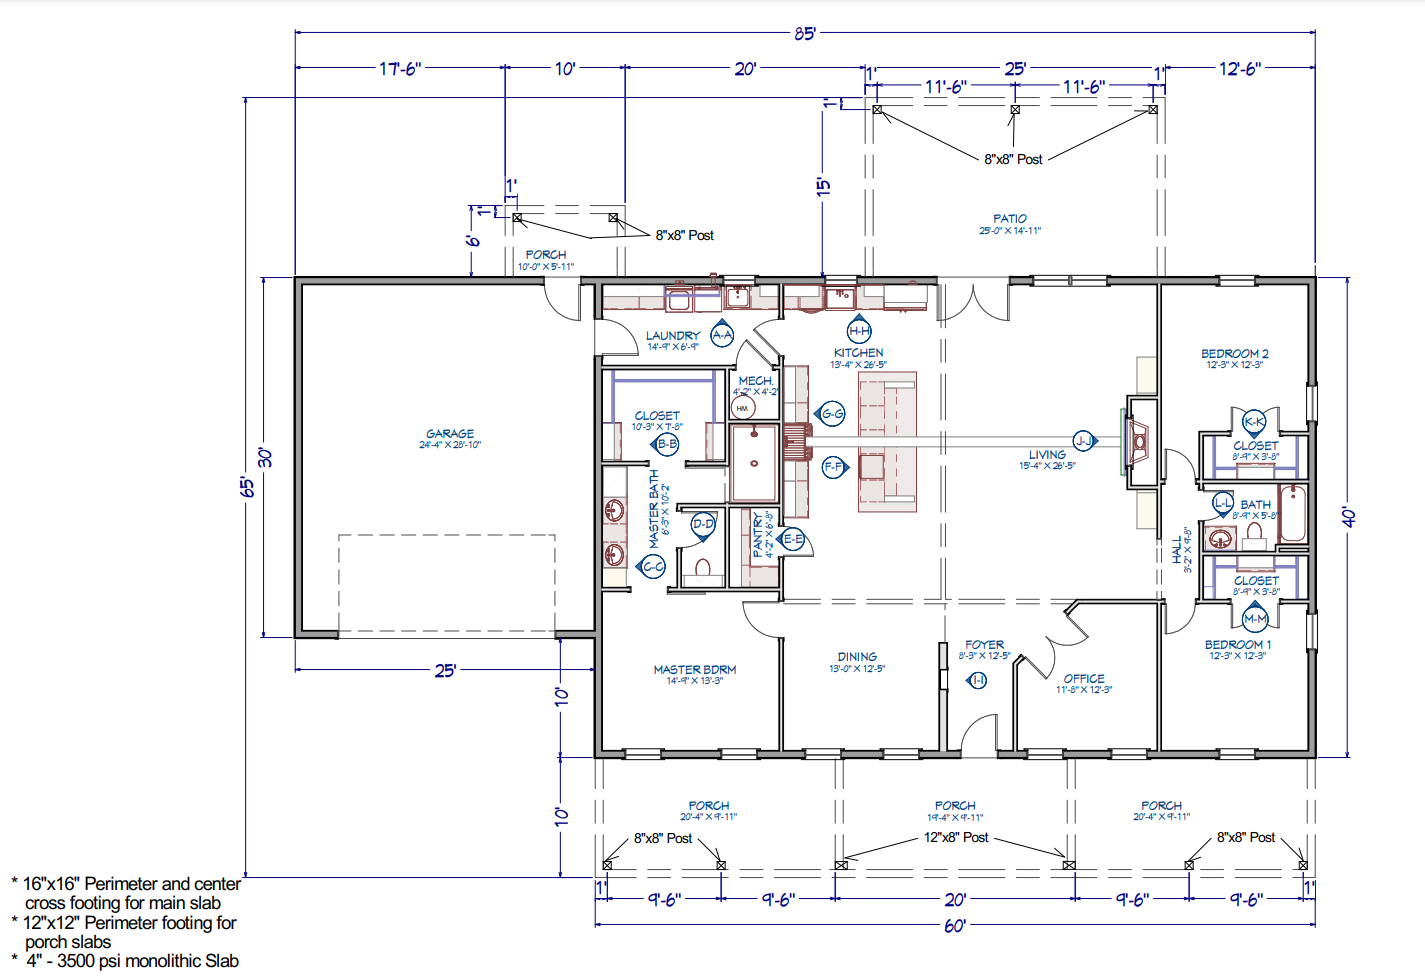 LP-3201 Zephyr Barndominium House Plan